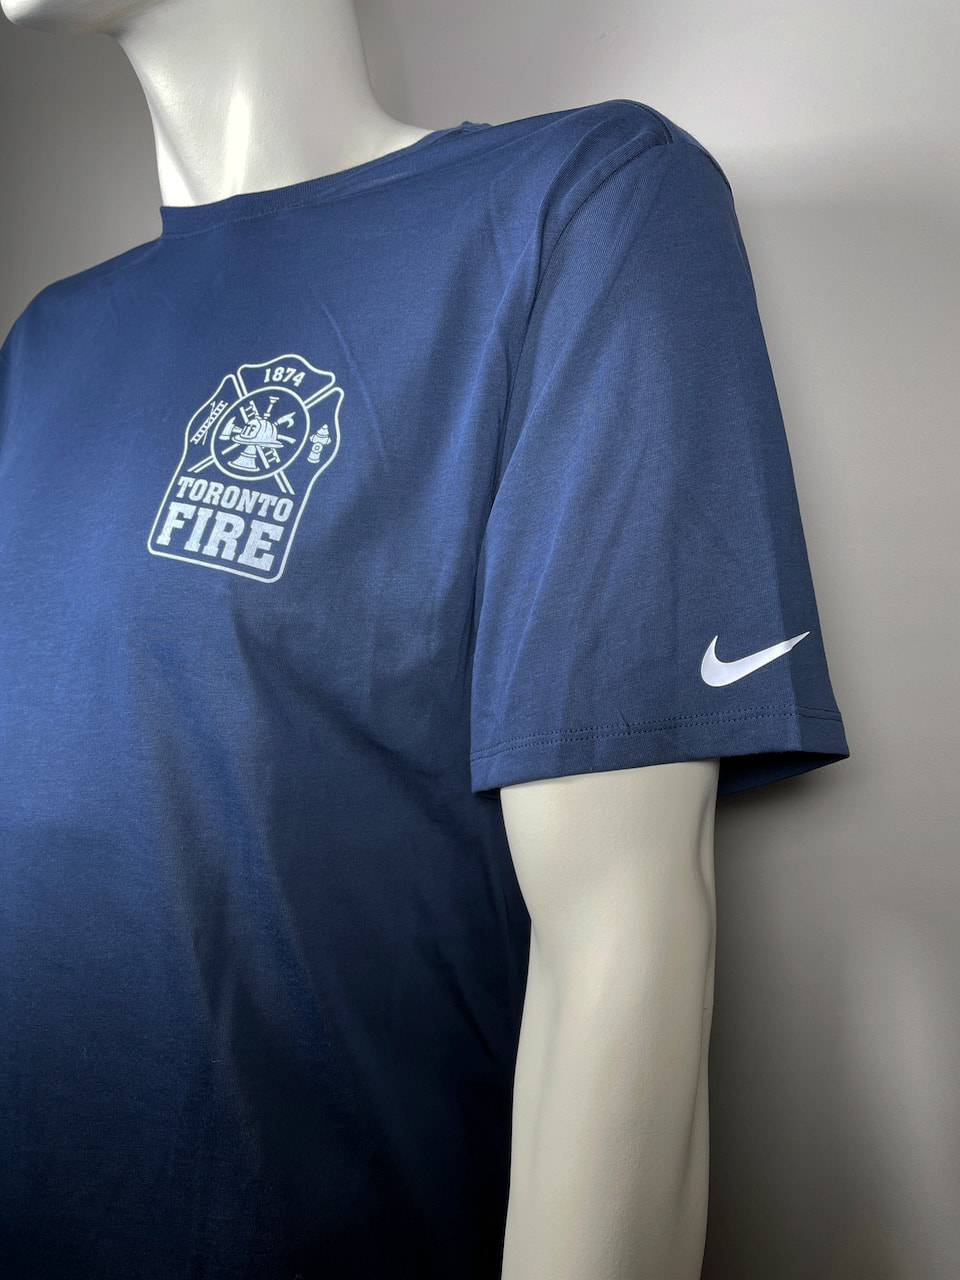 Fire - Nike Dri-Fit Performance SS T-Shirt (Men's) | Ethic Mountain